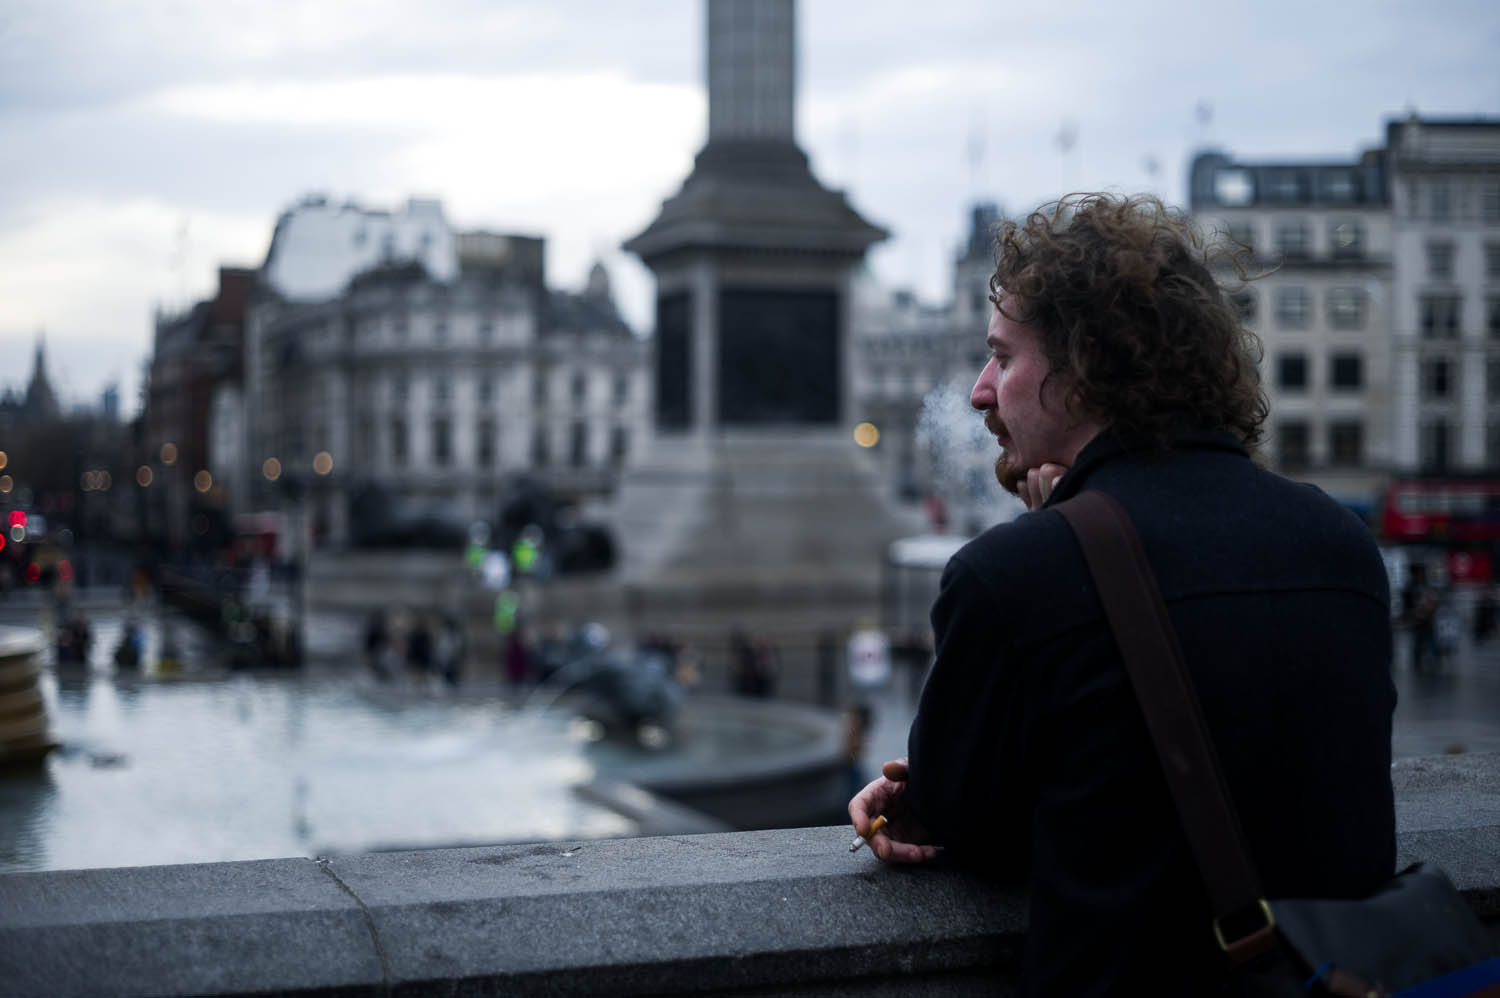 A man having a cigarette in London